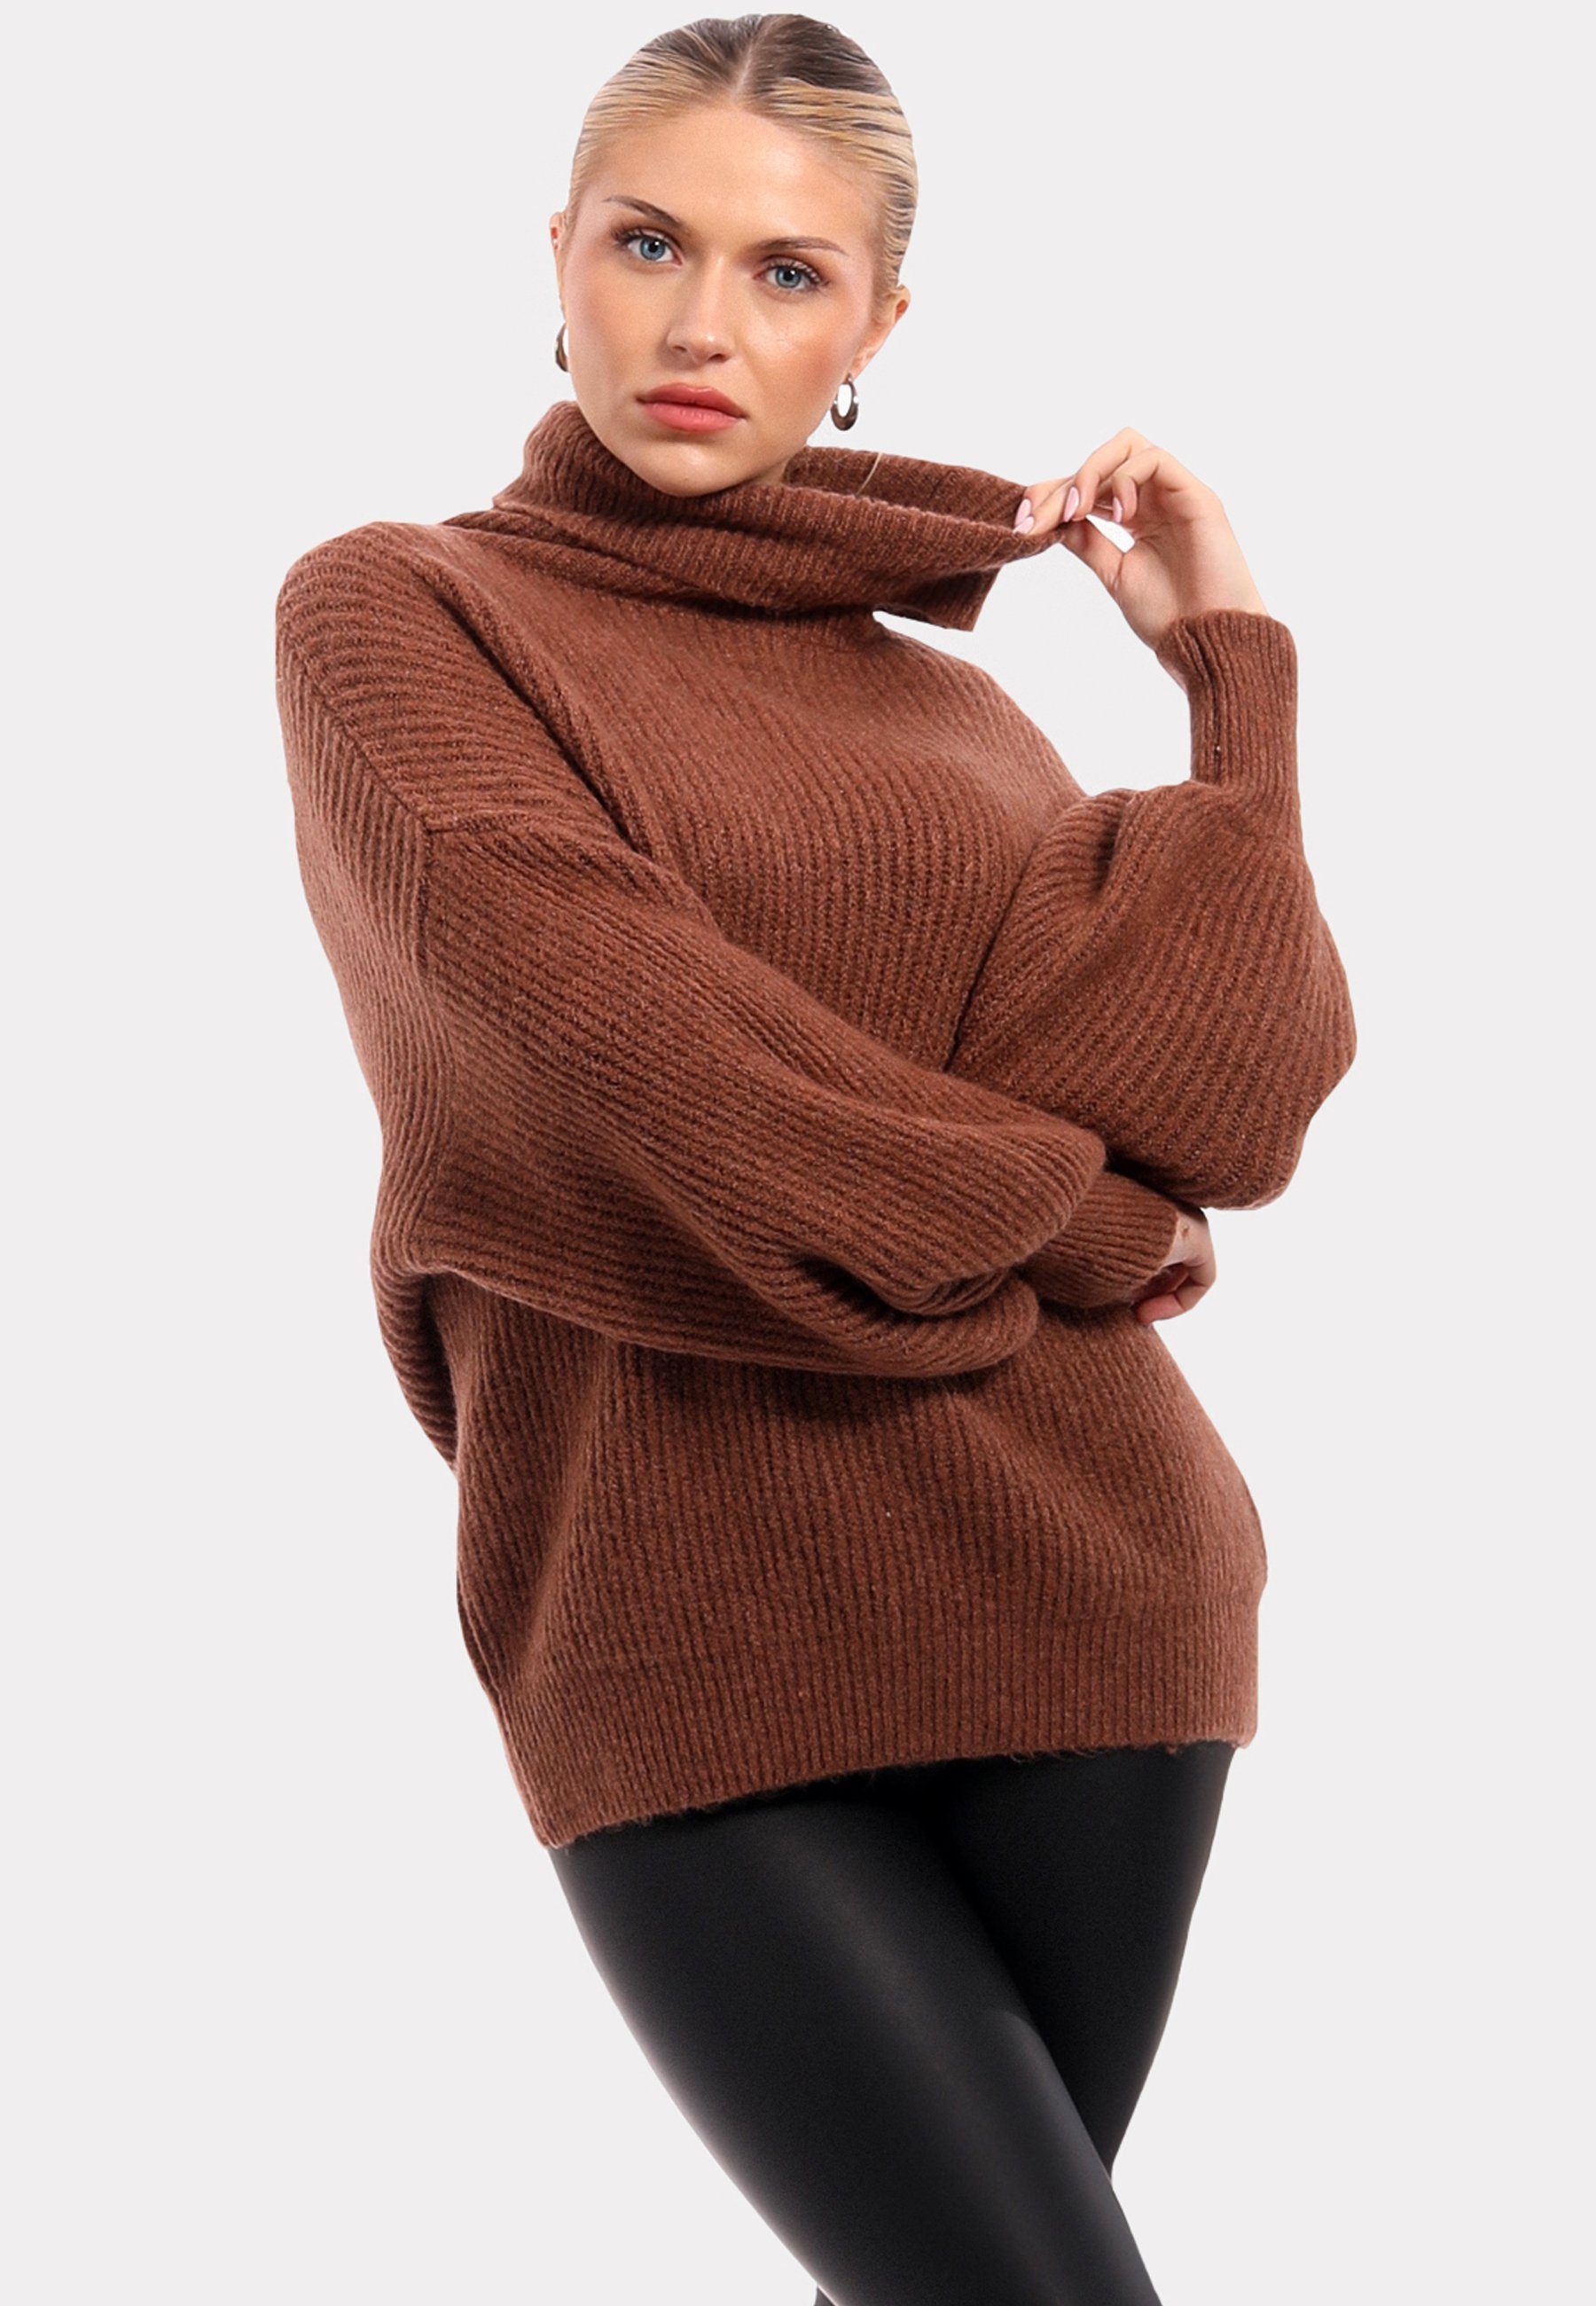 YC Fashion & Style Rollkragenpullover Winter Pullover mit Rollkragen Casual Sweater in Unifarbe Camel